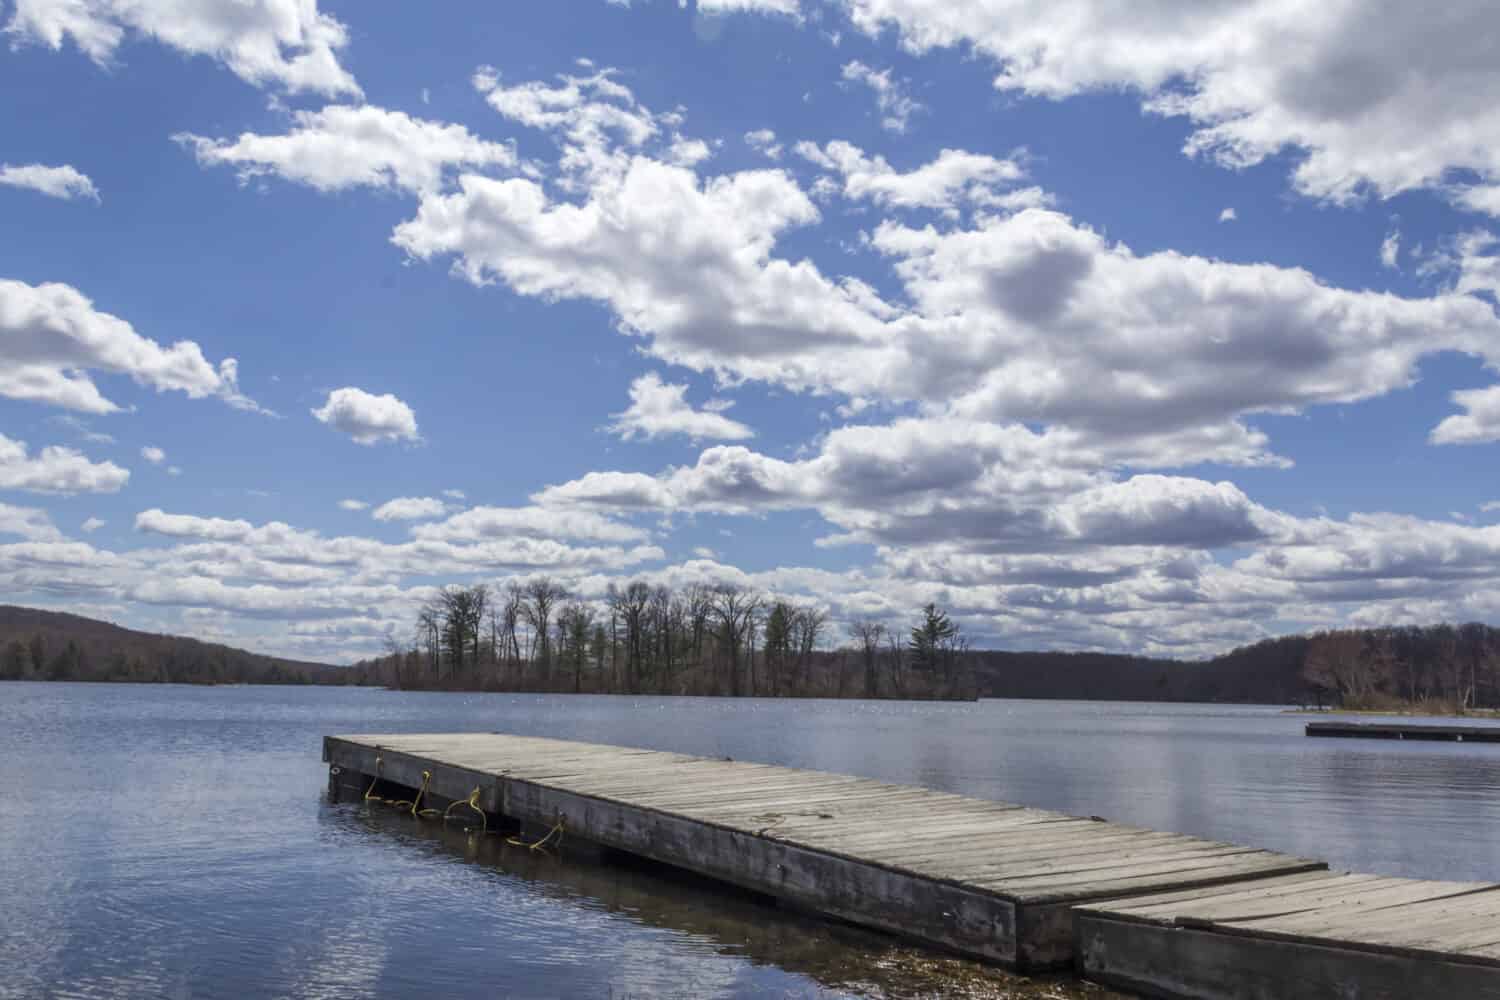 Dock stretches across Wawayanda Lake in early springtime